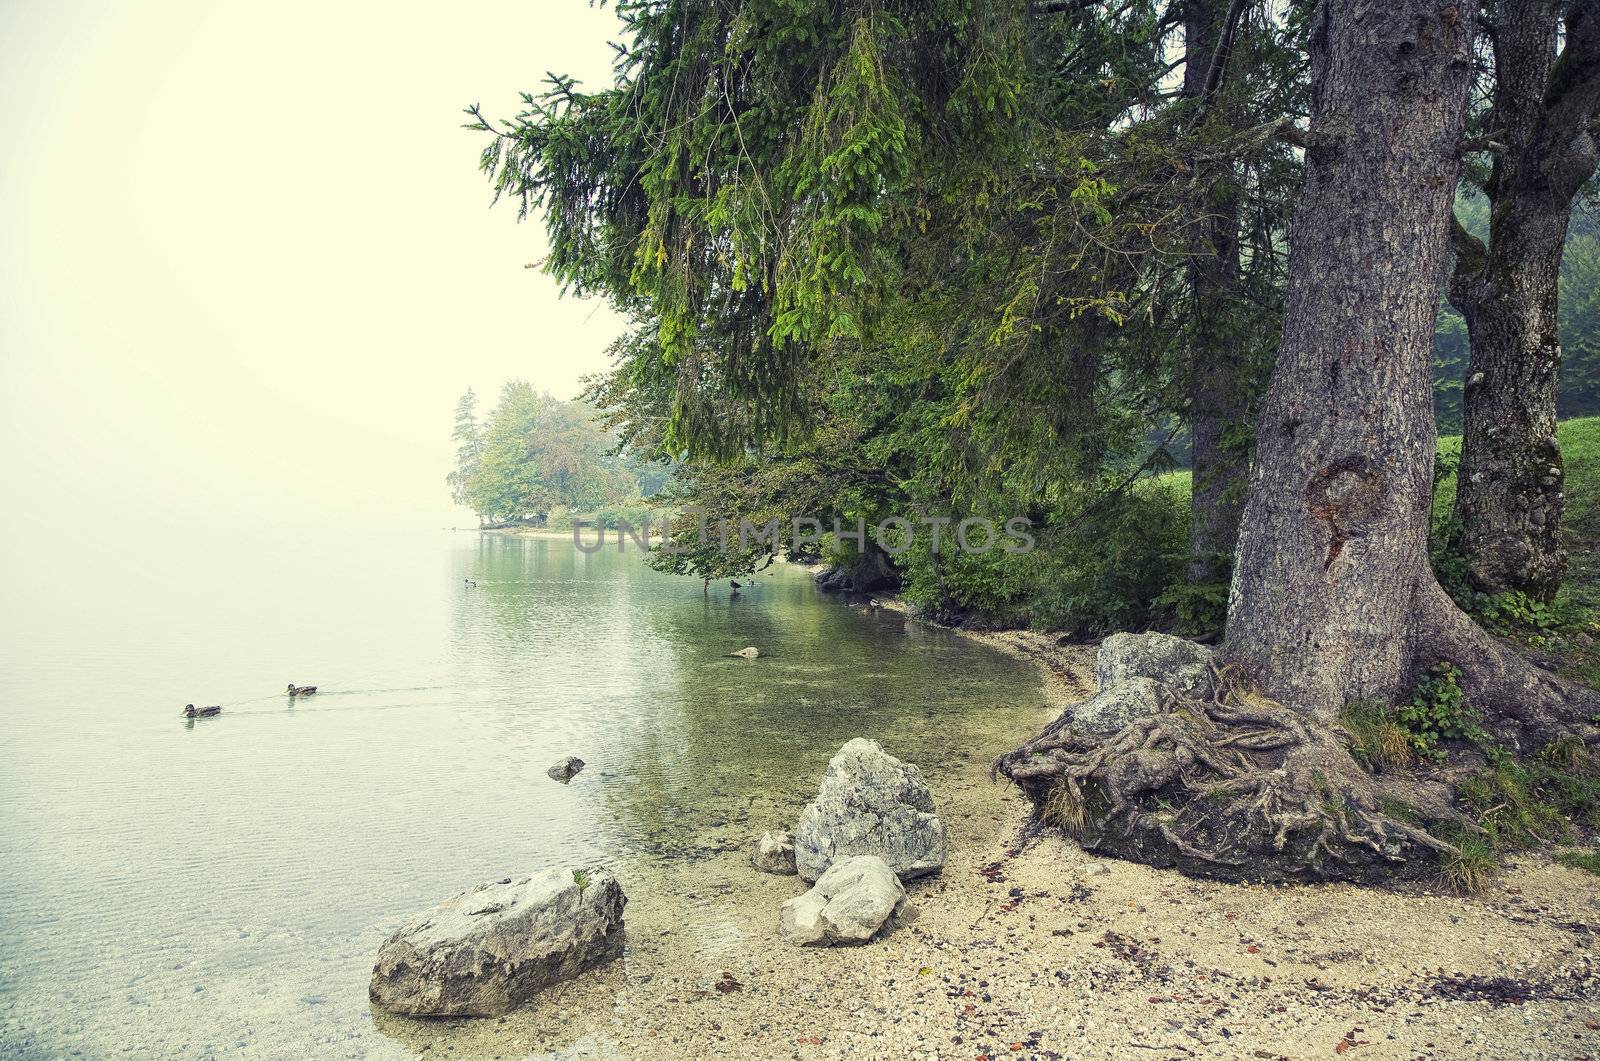 By Lake Bohinj Slovenia by ABCDK